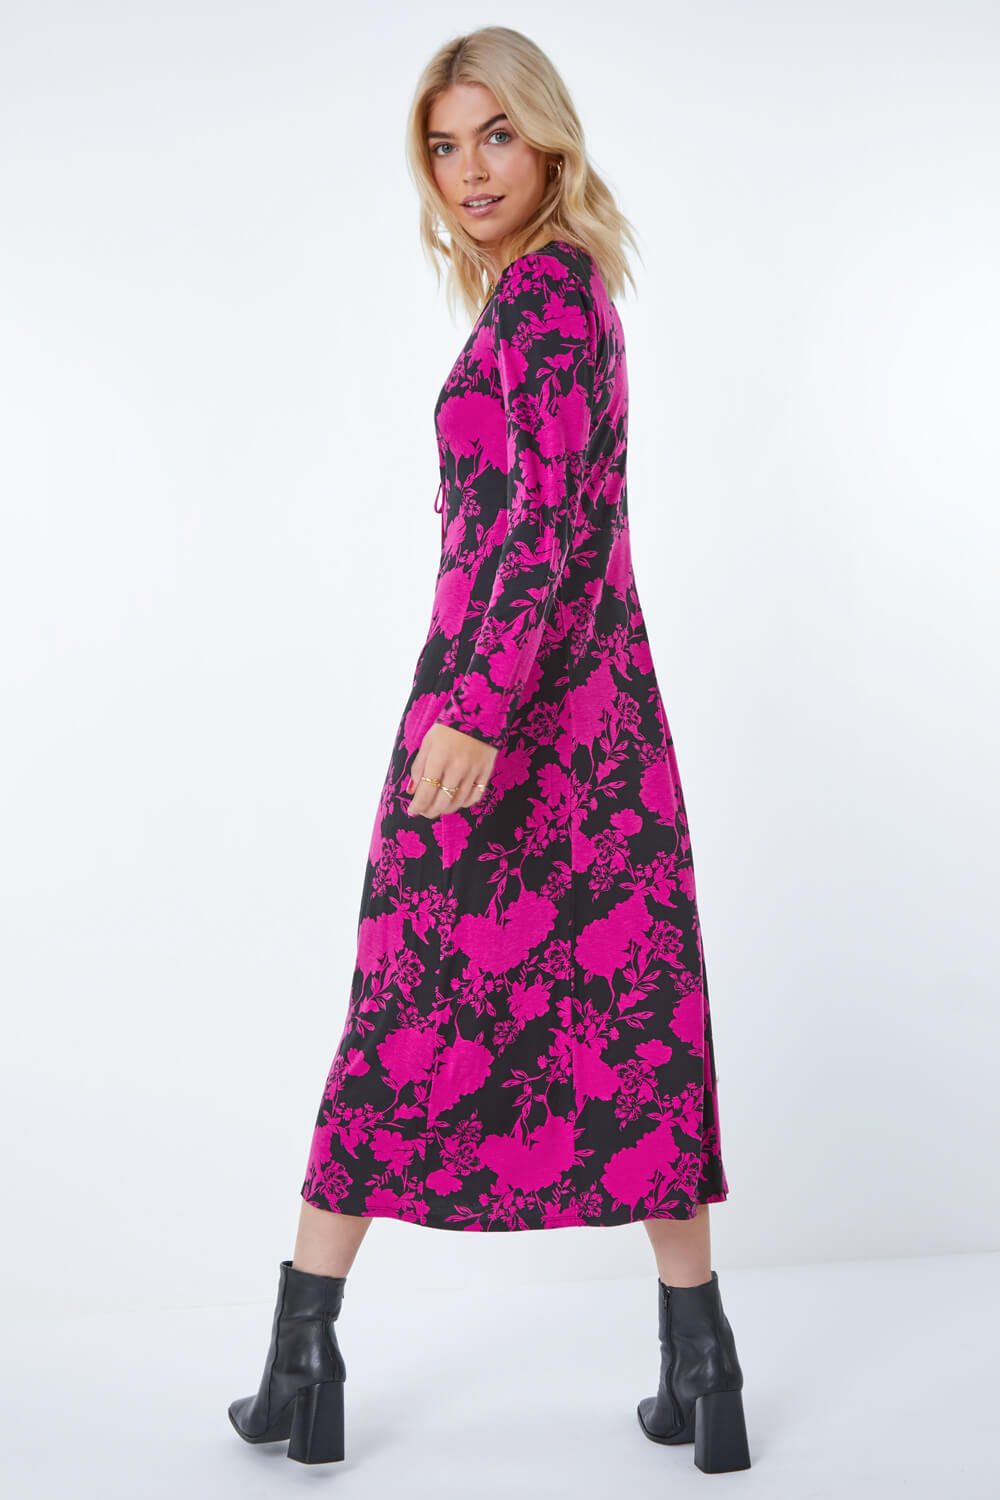 Fushcia Floral Print Lace Trim Midi Dress, Image 3 of 5